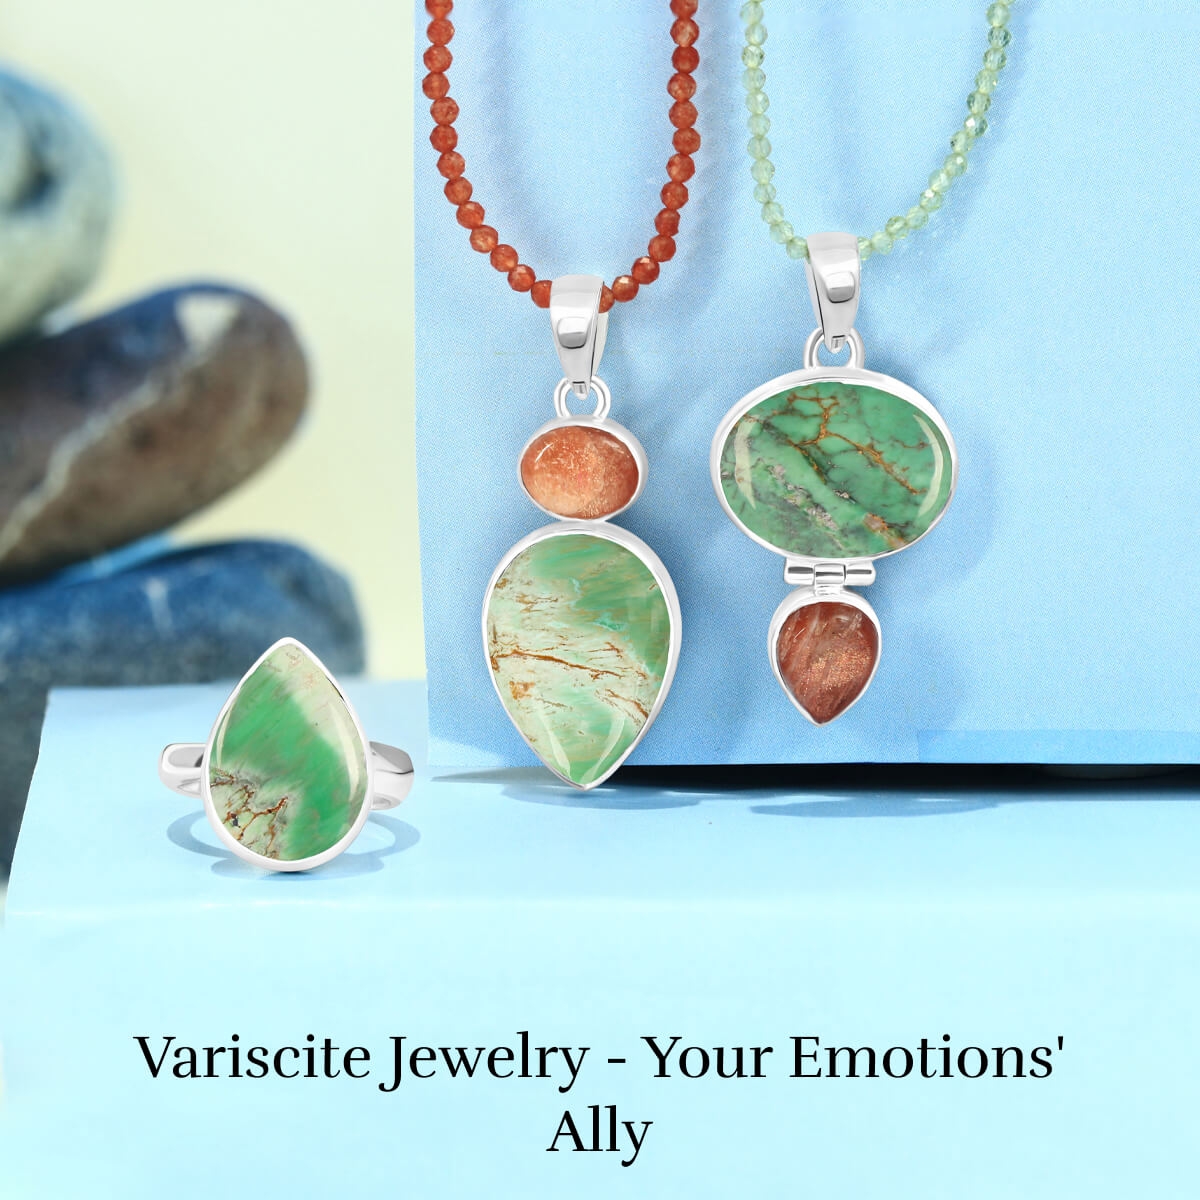 Wearing Variscite Jewelry Helps in Emotional Healing